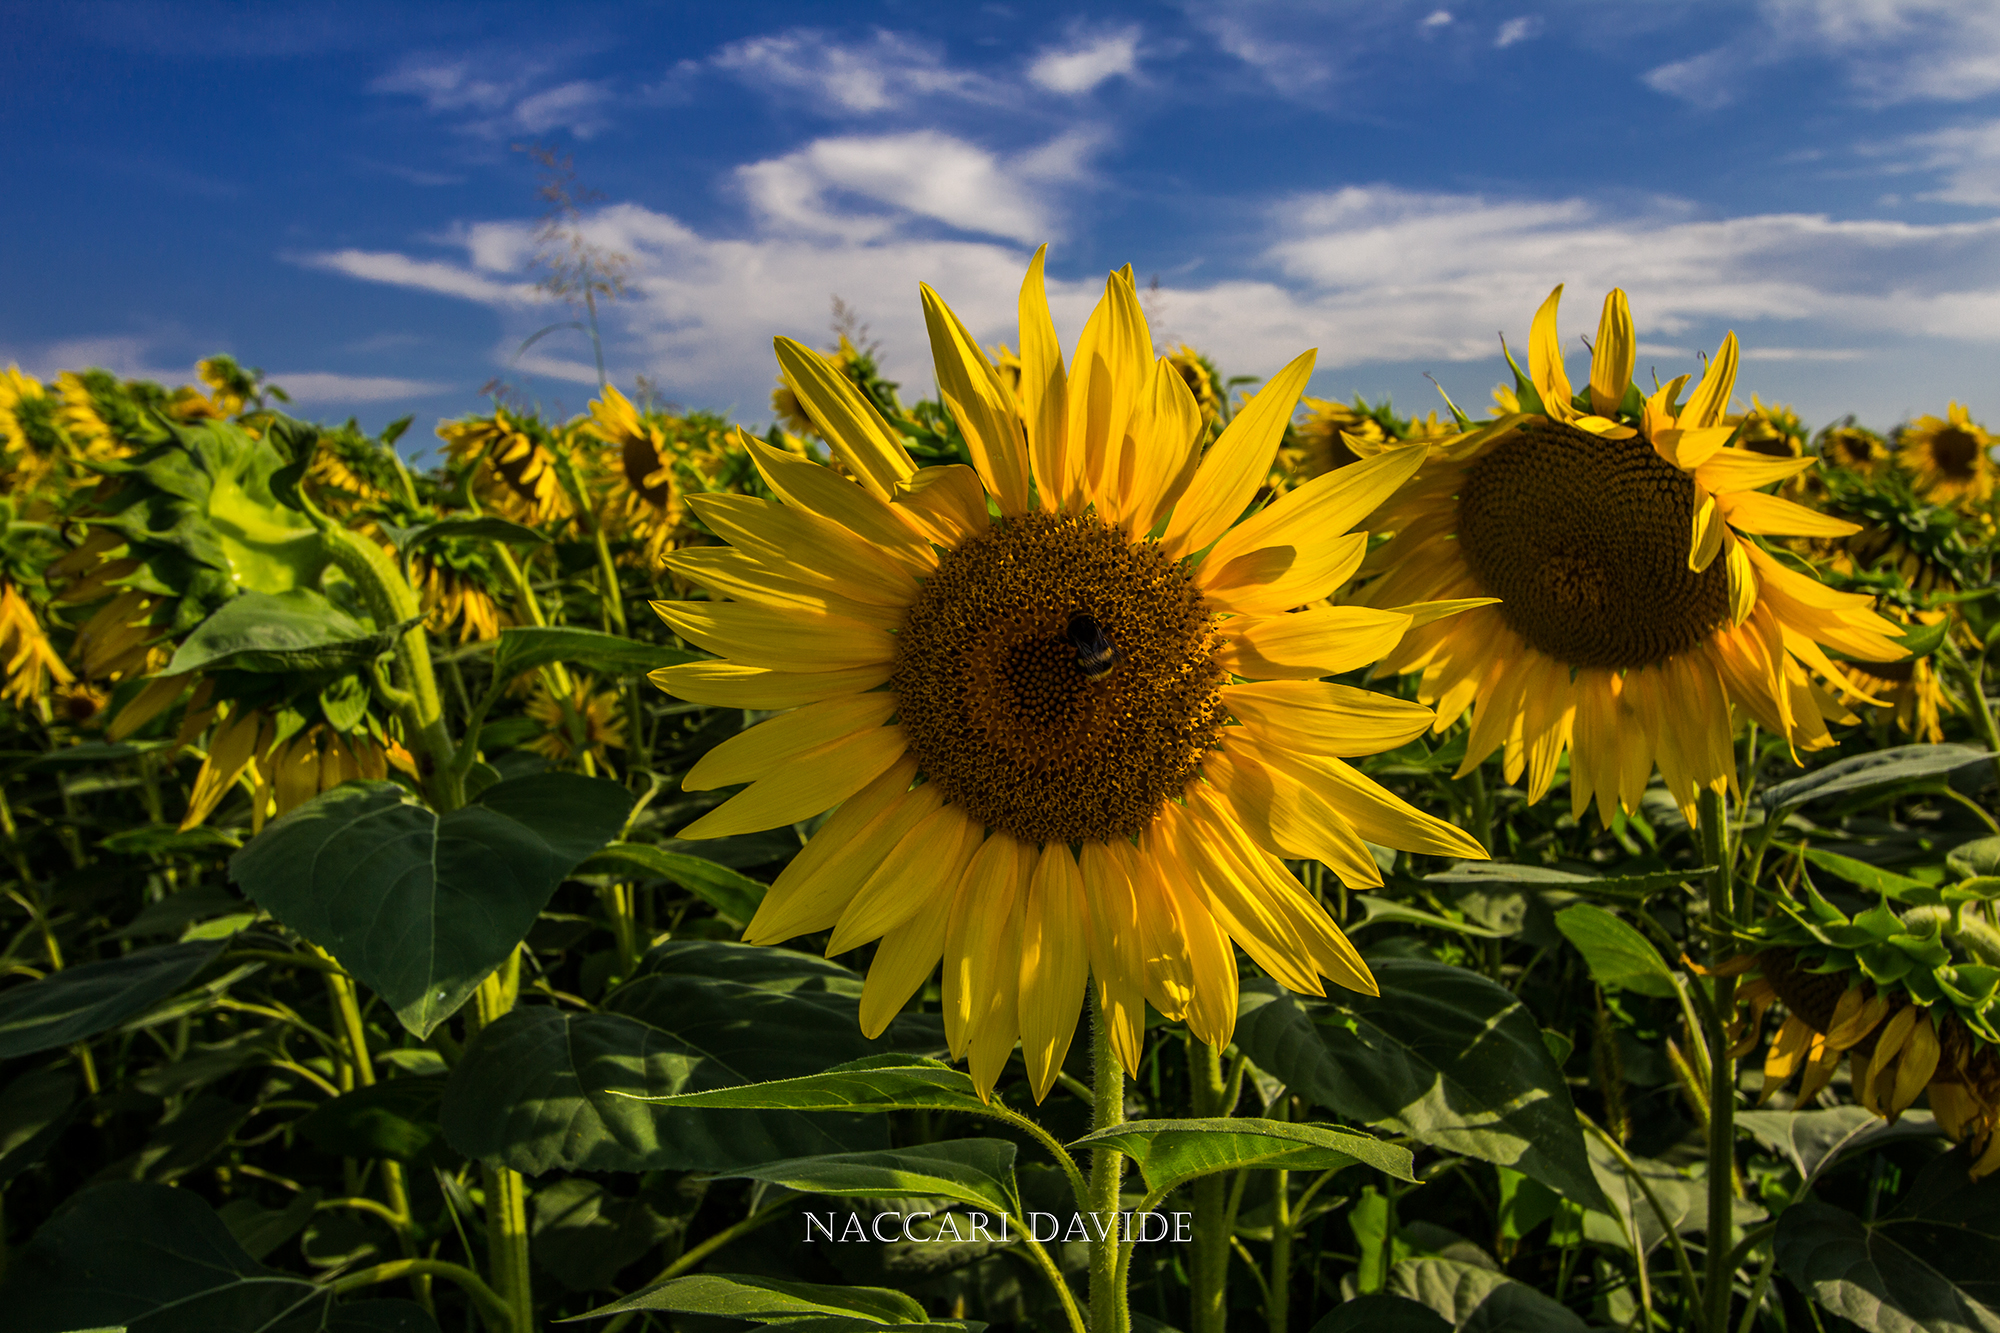 Last sunflowers before Tuscany...